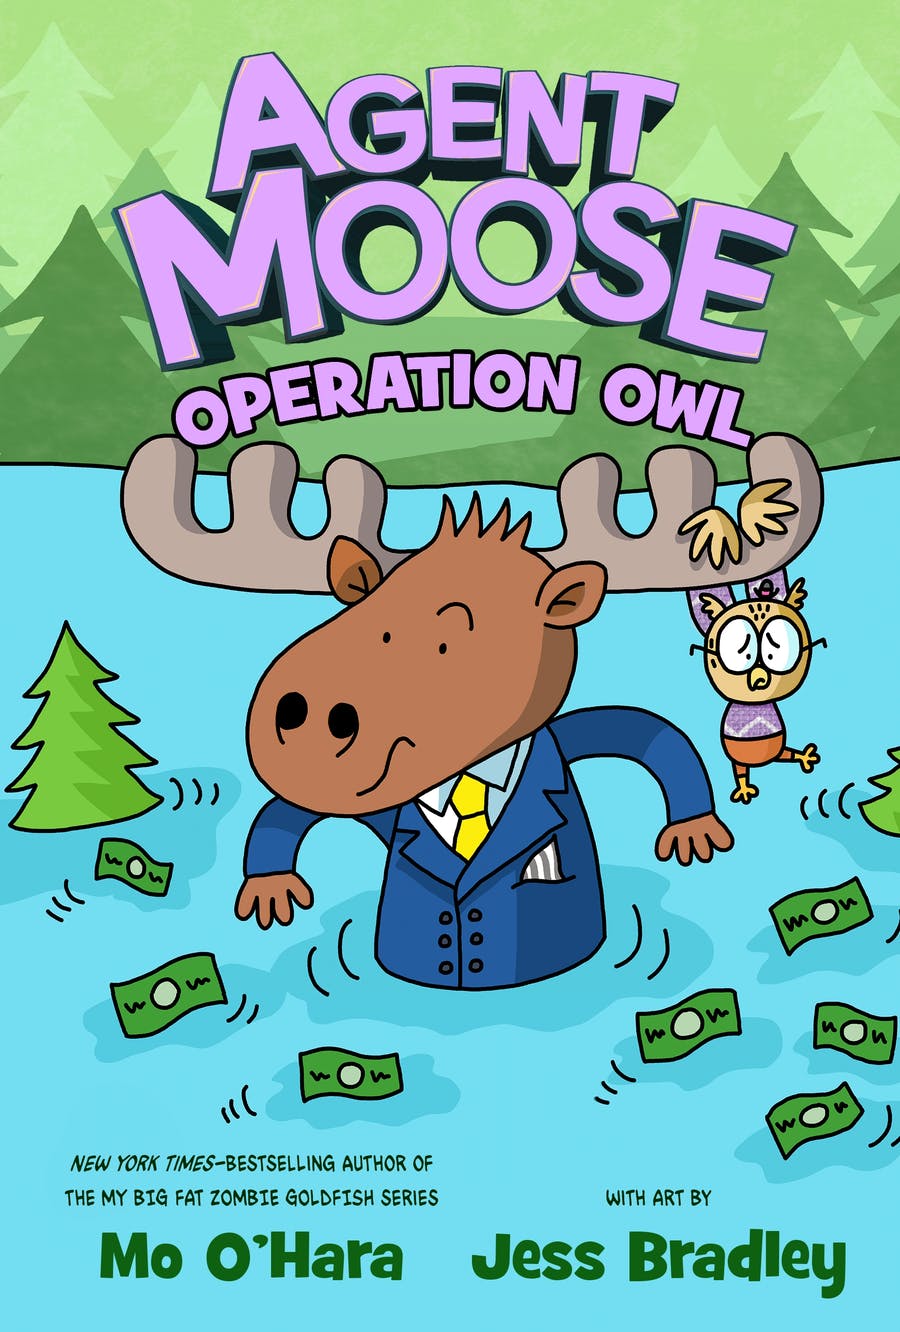 Operation Agent Moose